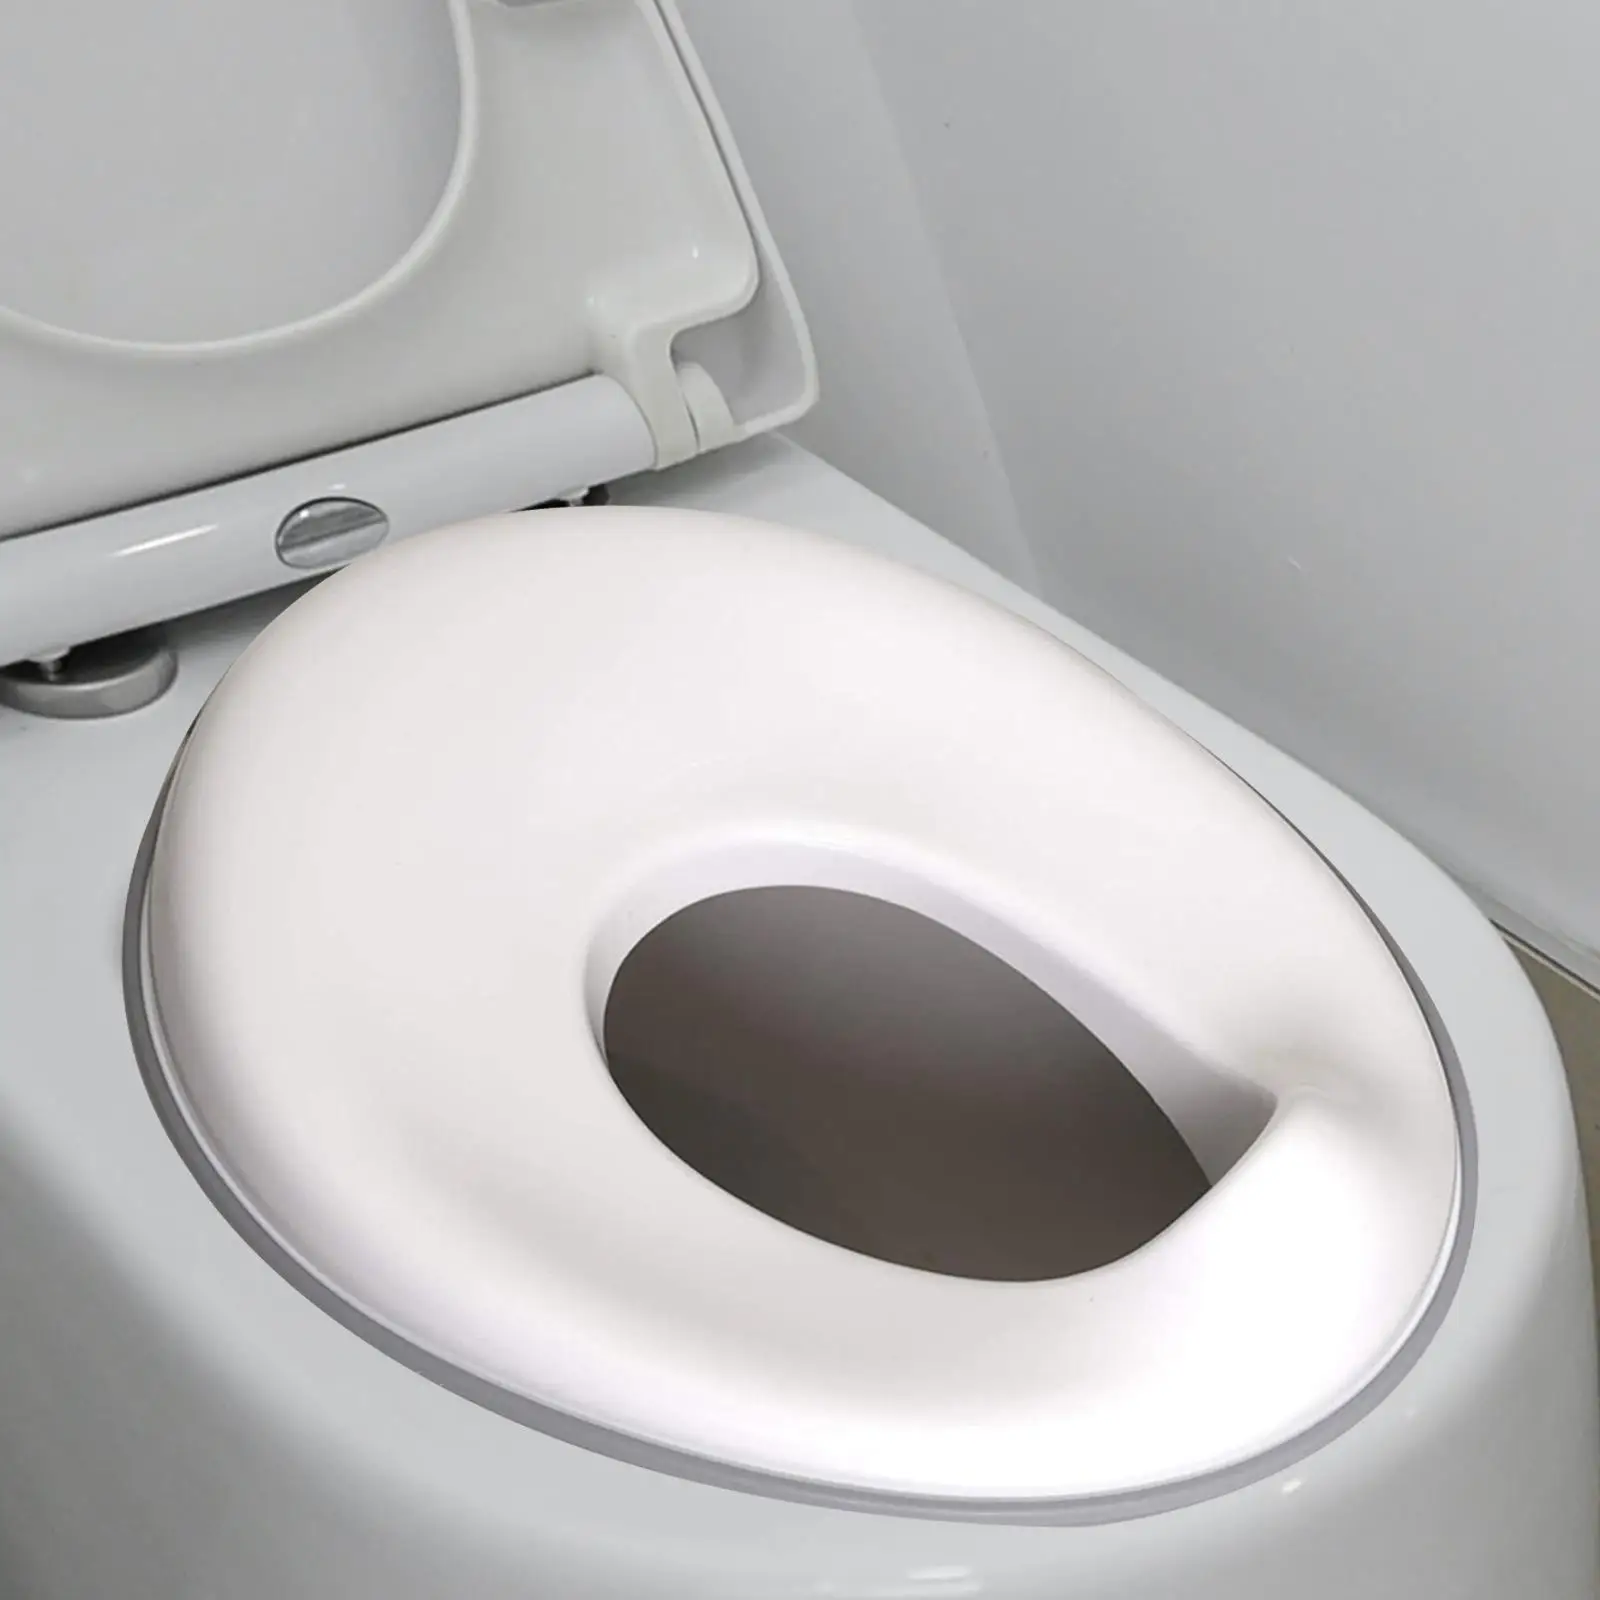 Toilet Training Seat Potty Seat Has Storage Hook Non Slip Fits Most Toilets Toilet Trainer